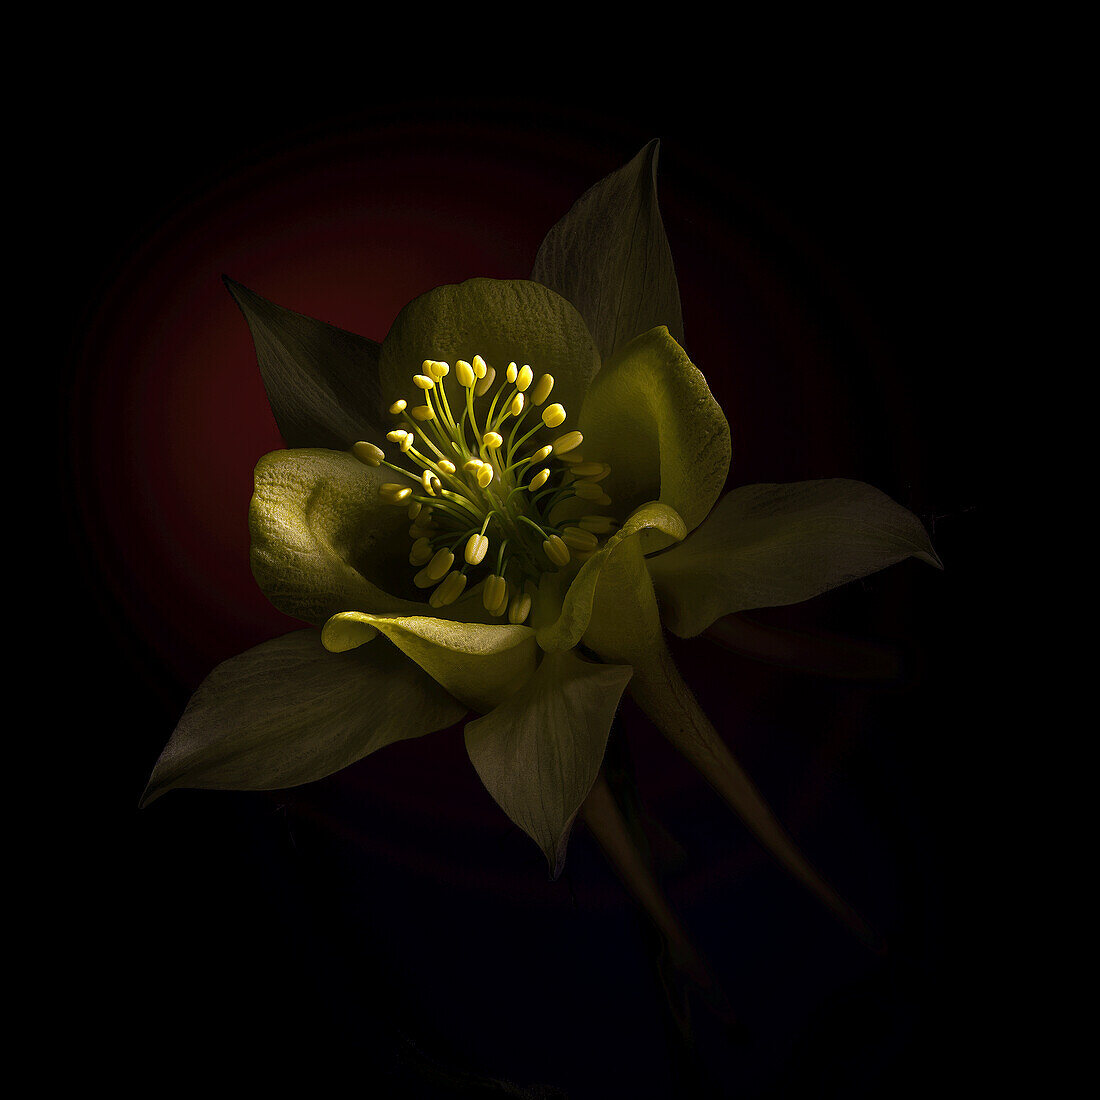 USA, Colorado, Fort Collins. Domestic columbine flower close-up.